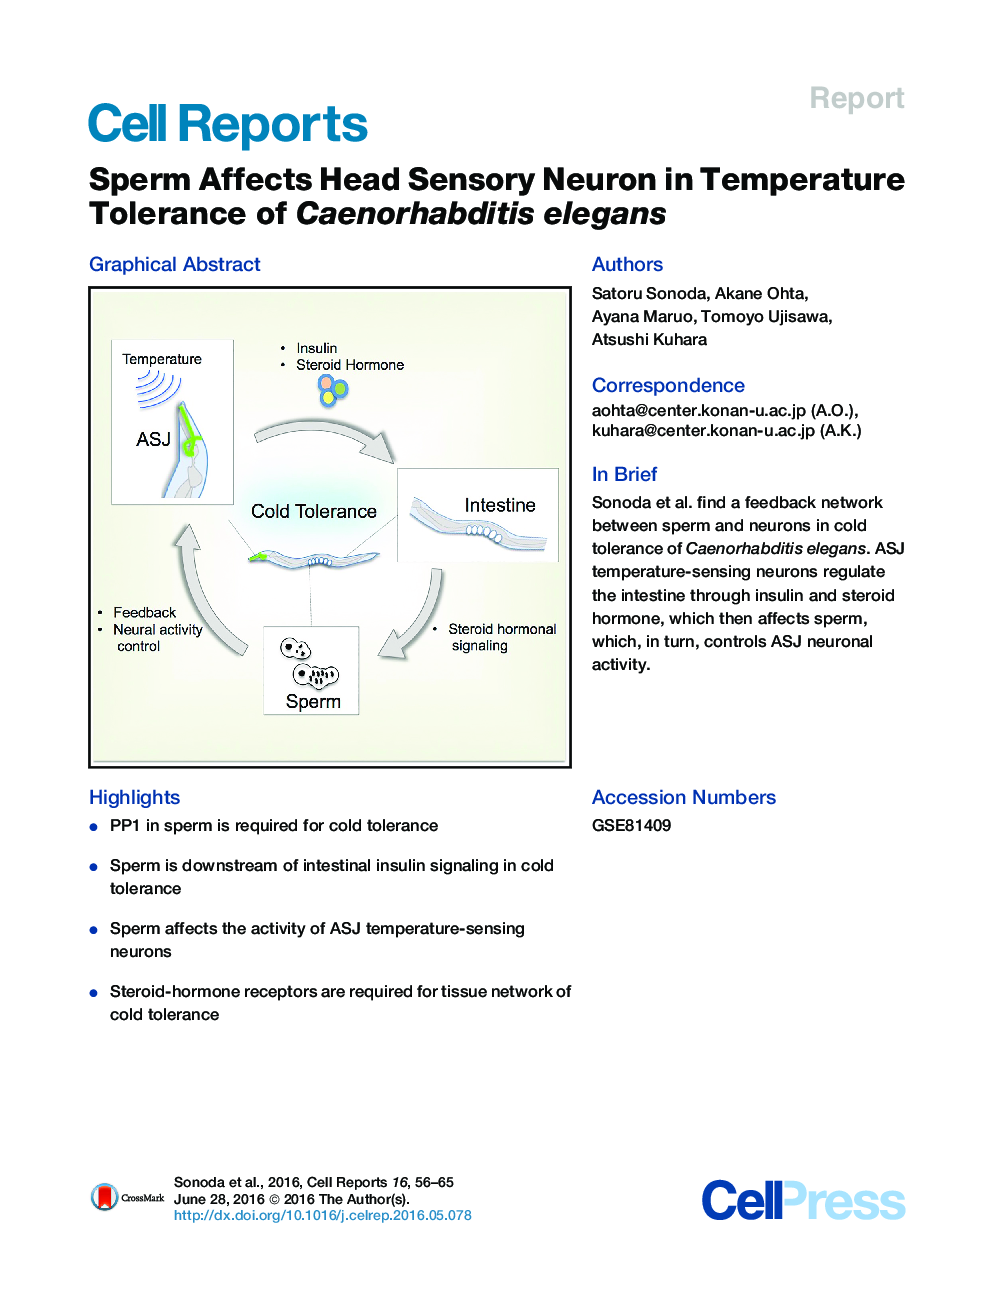 Sperm Affects Head Sensory Neuron in Temperature Tolerance of Caenorhabditis elegans